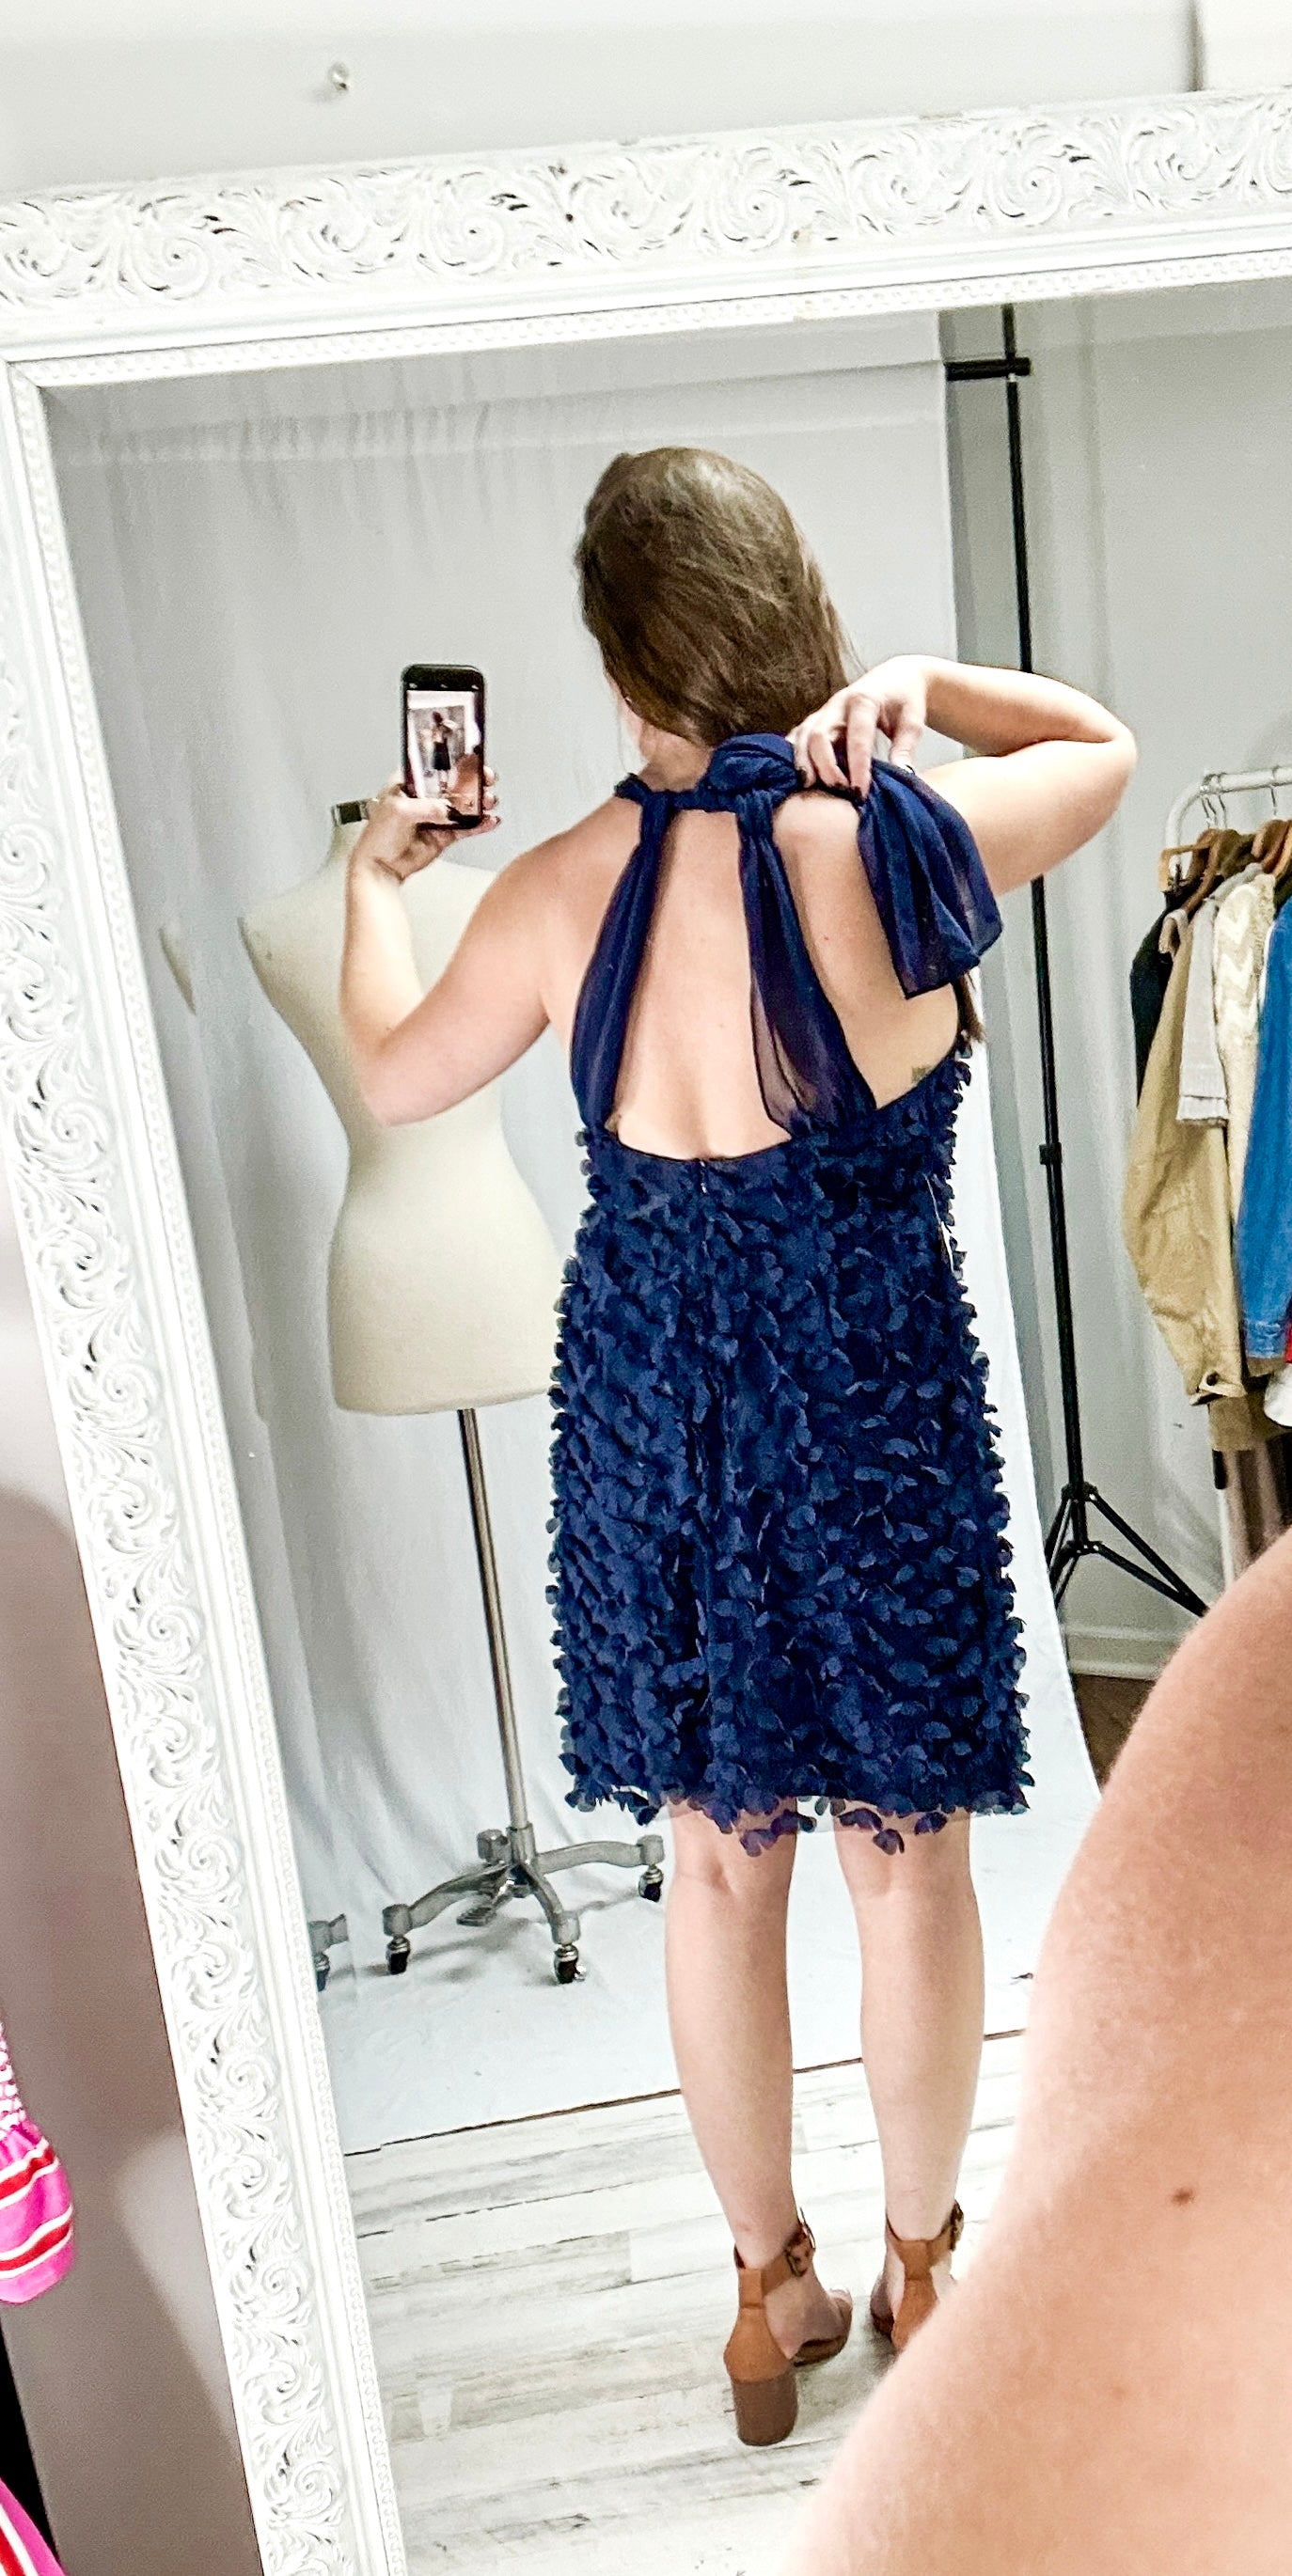 NEW Jill Jill Stuart Dark Blue Flower Appliqué Dress (8)